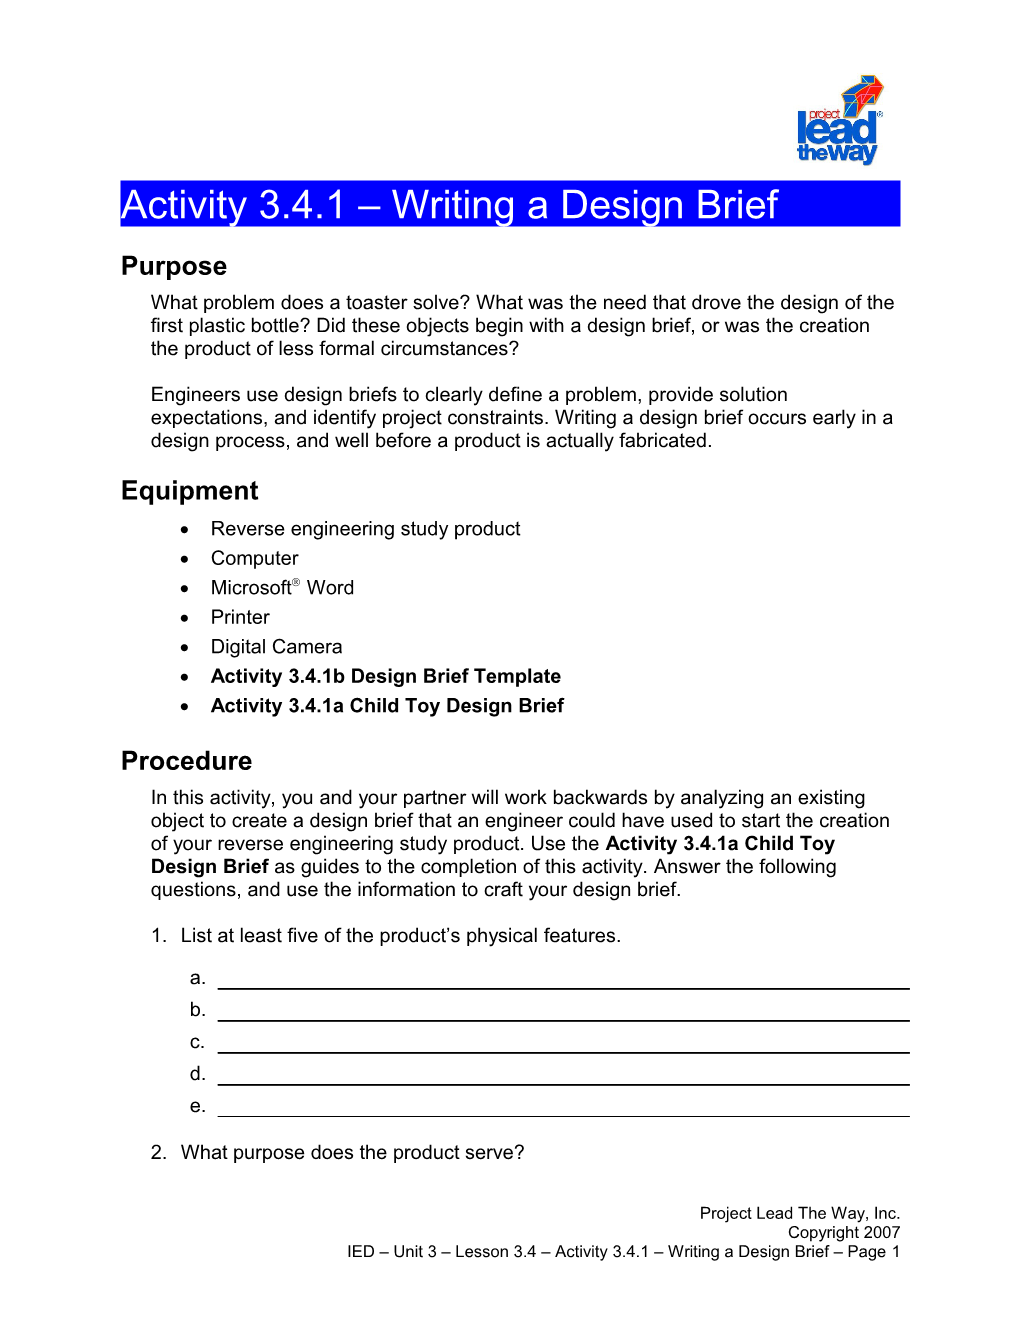 Activity 3.4.1: Writing a Design Brief